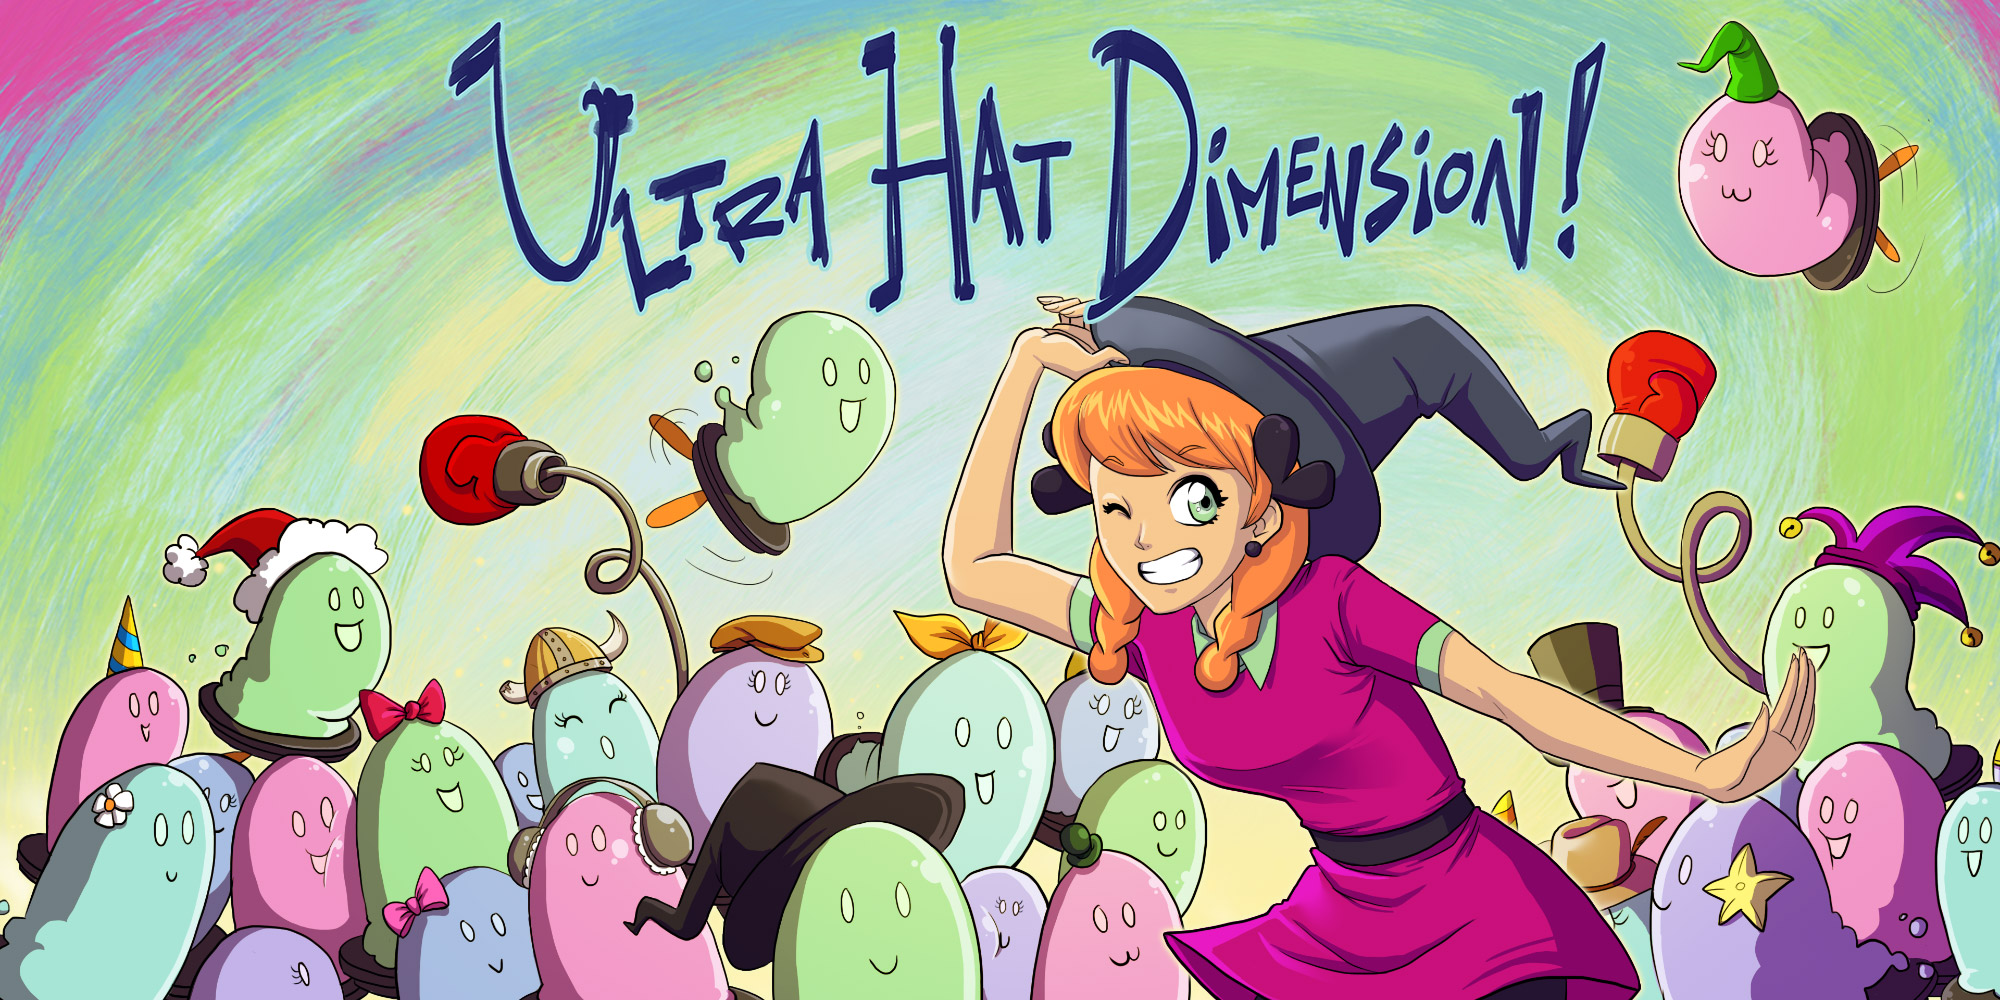 Ultra Hat Dimension | Programas descargables Nintendo Switch ...